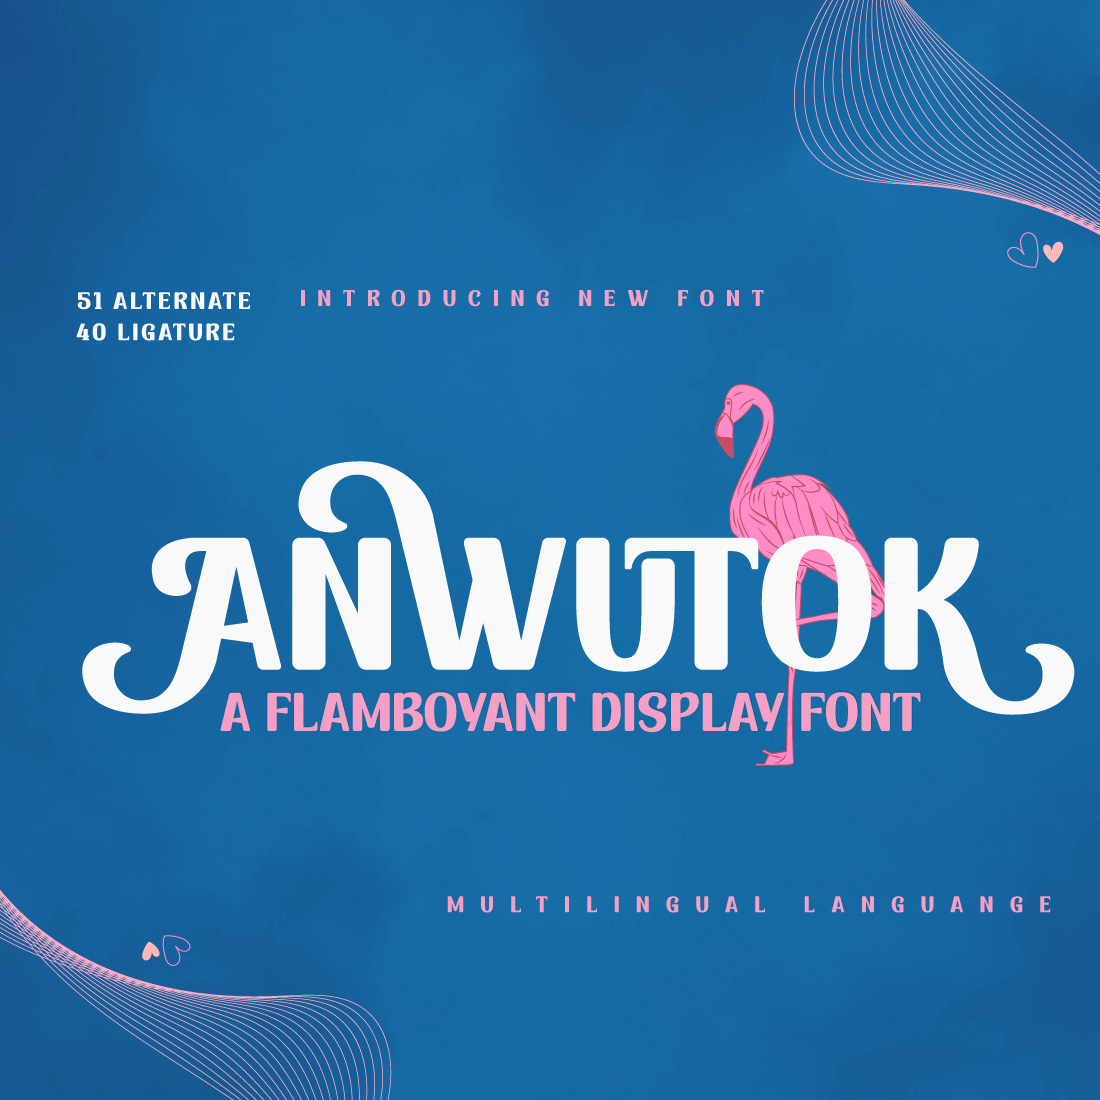 ANWUTOK | Display Font cover image.